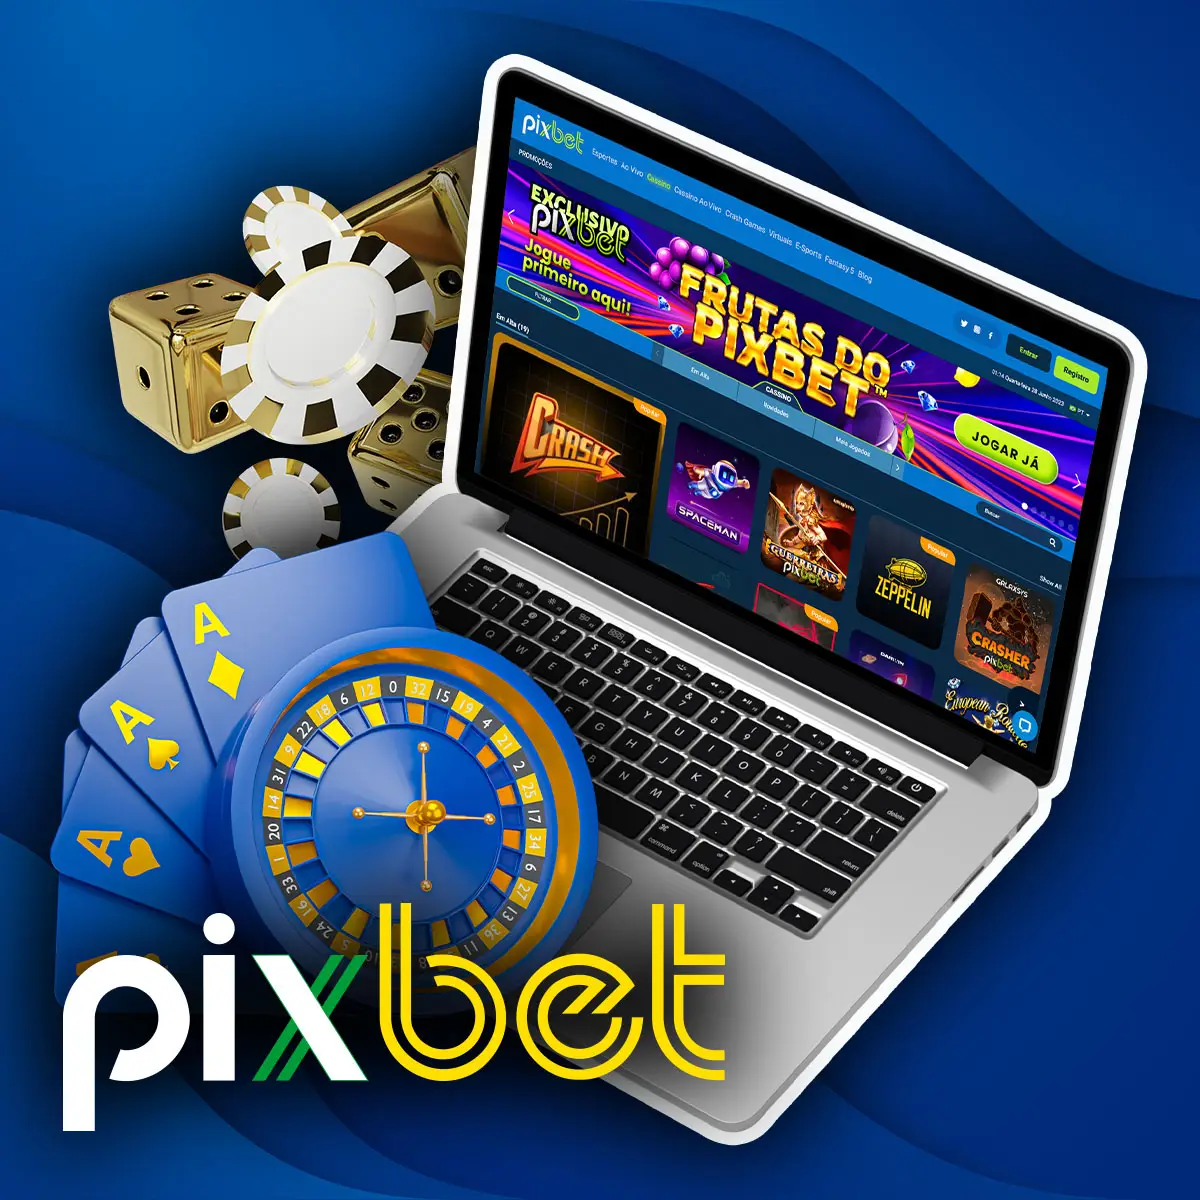 Variedade de jogos de casino na casa de apostas Pixbet no Brasil